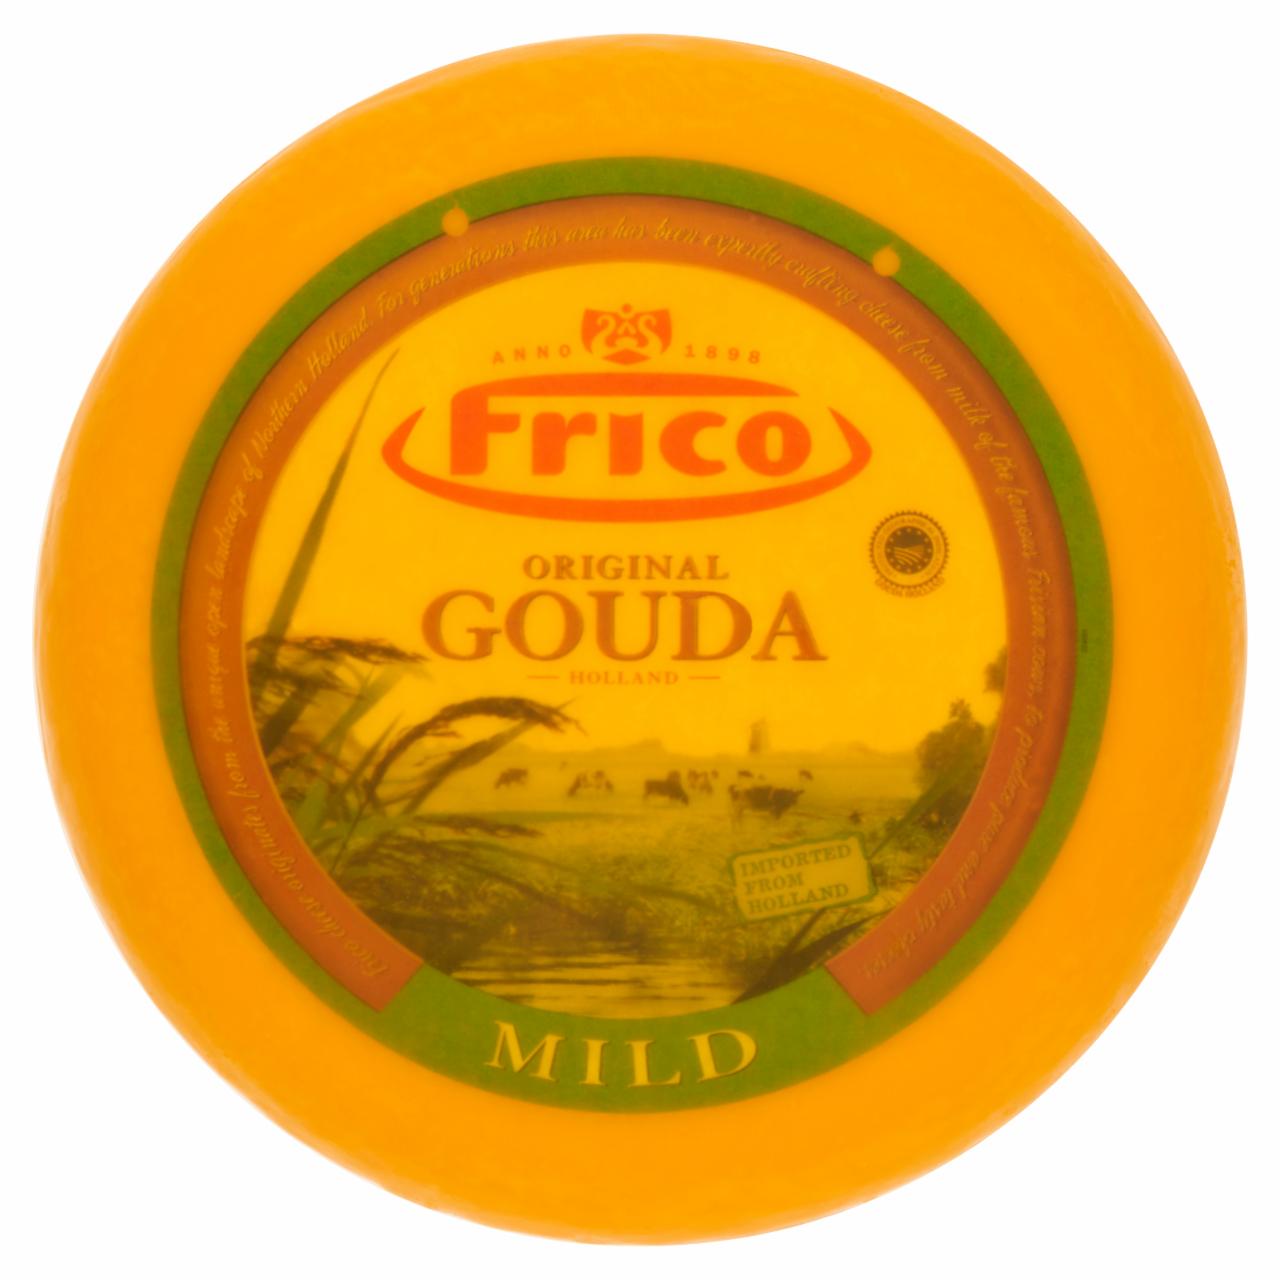 Képek - Frico Gouda zsíros, félkemény sajt